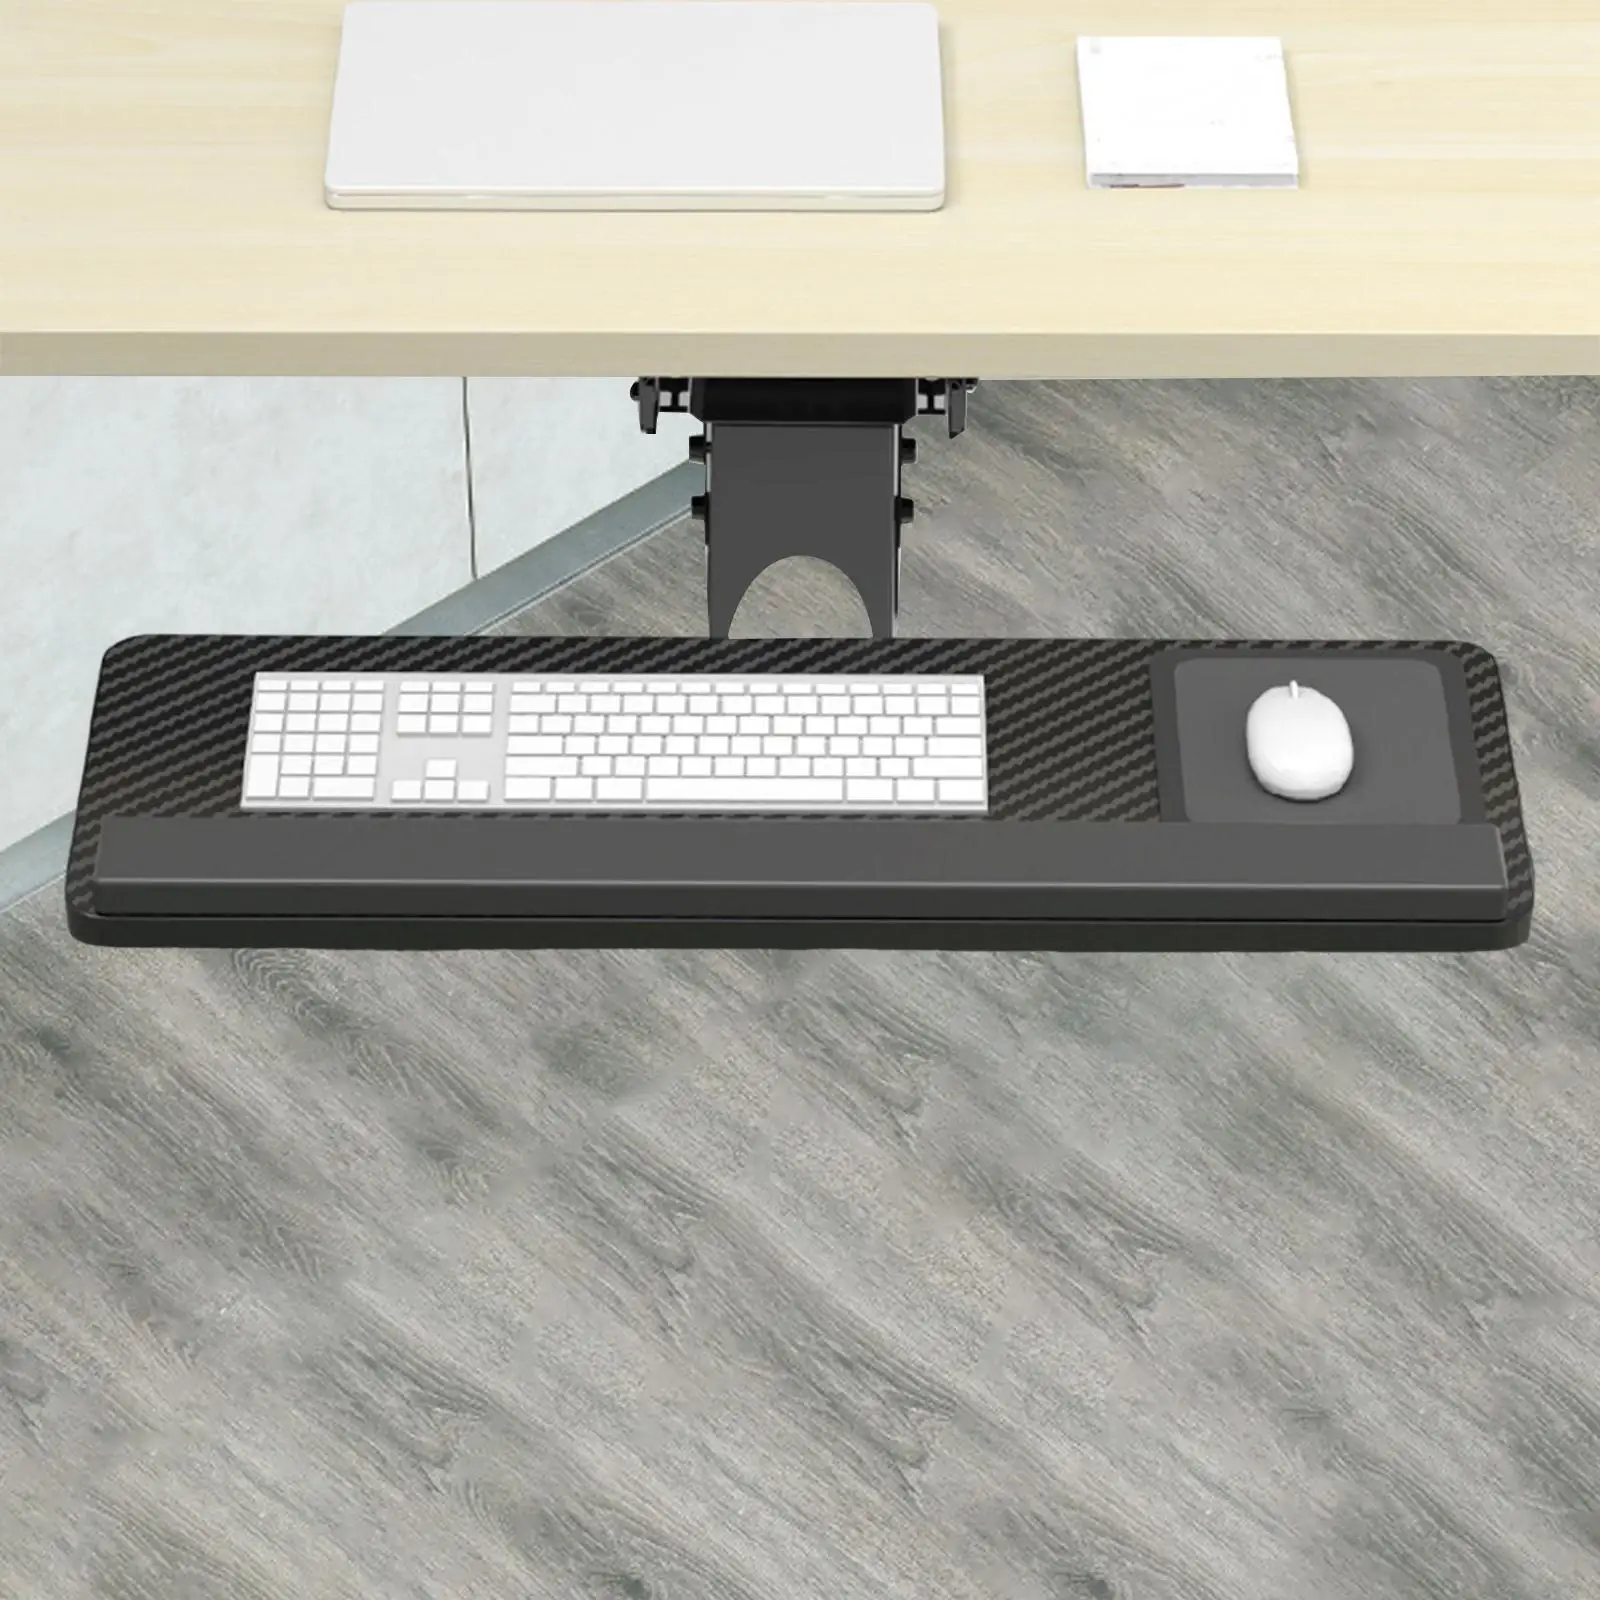 Slide Out Black Under Desk Keyboard Tray Shelf with Mounting Hardware Rotatable Ergonomic Adjustable Platform for Gaming Typing